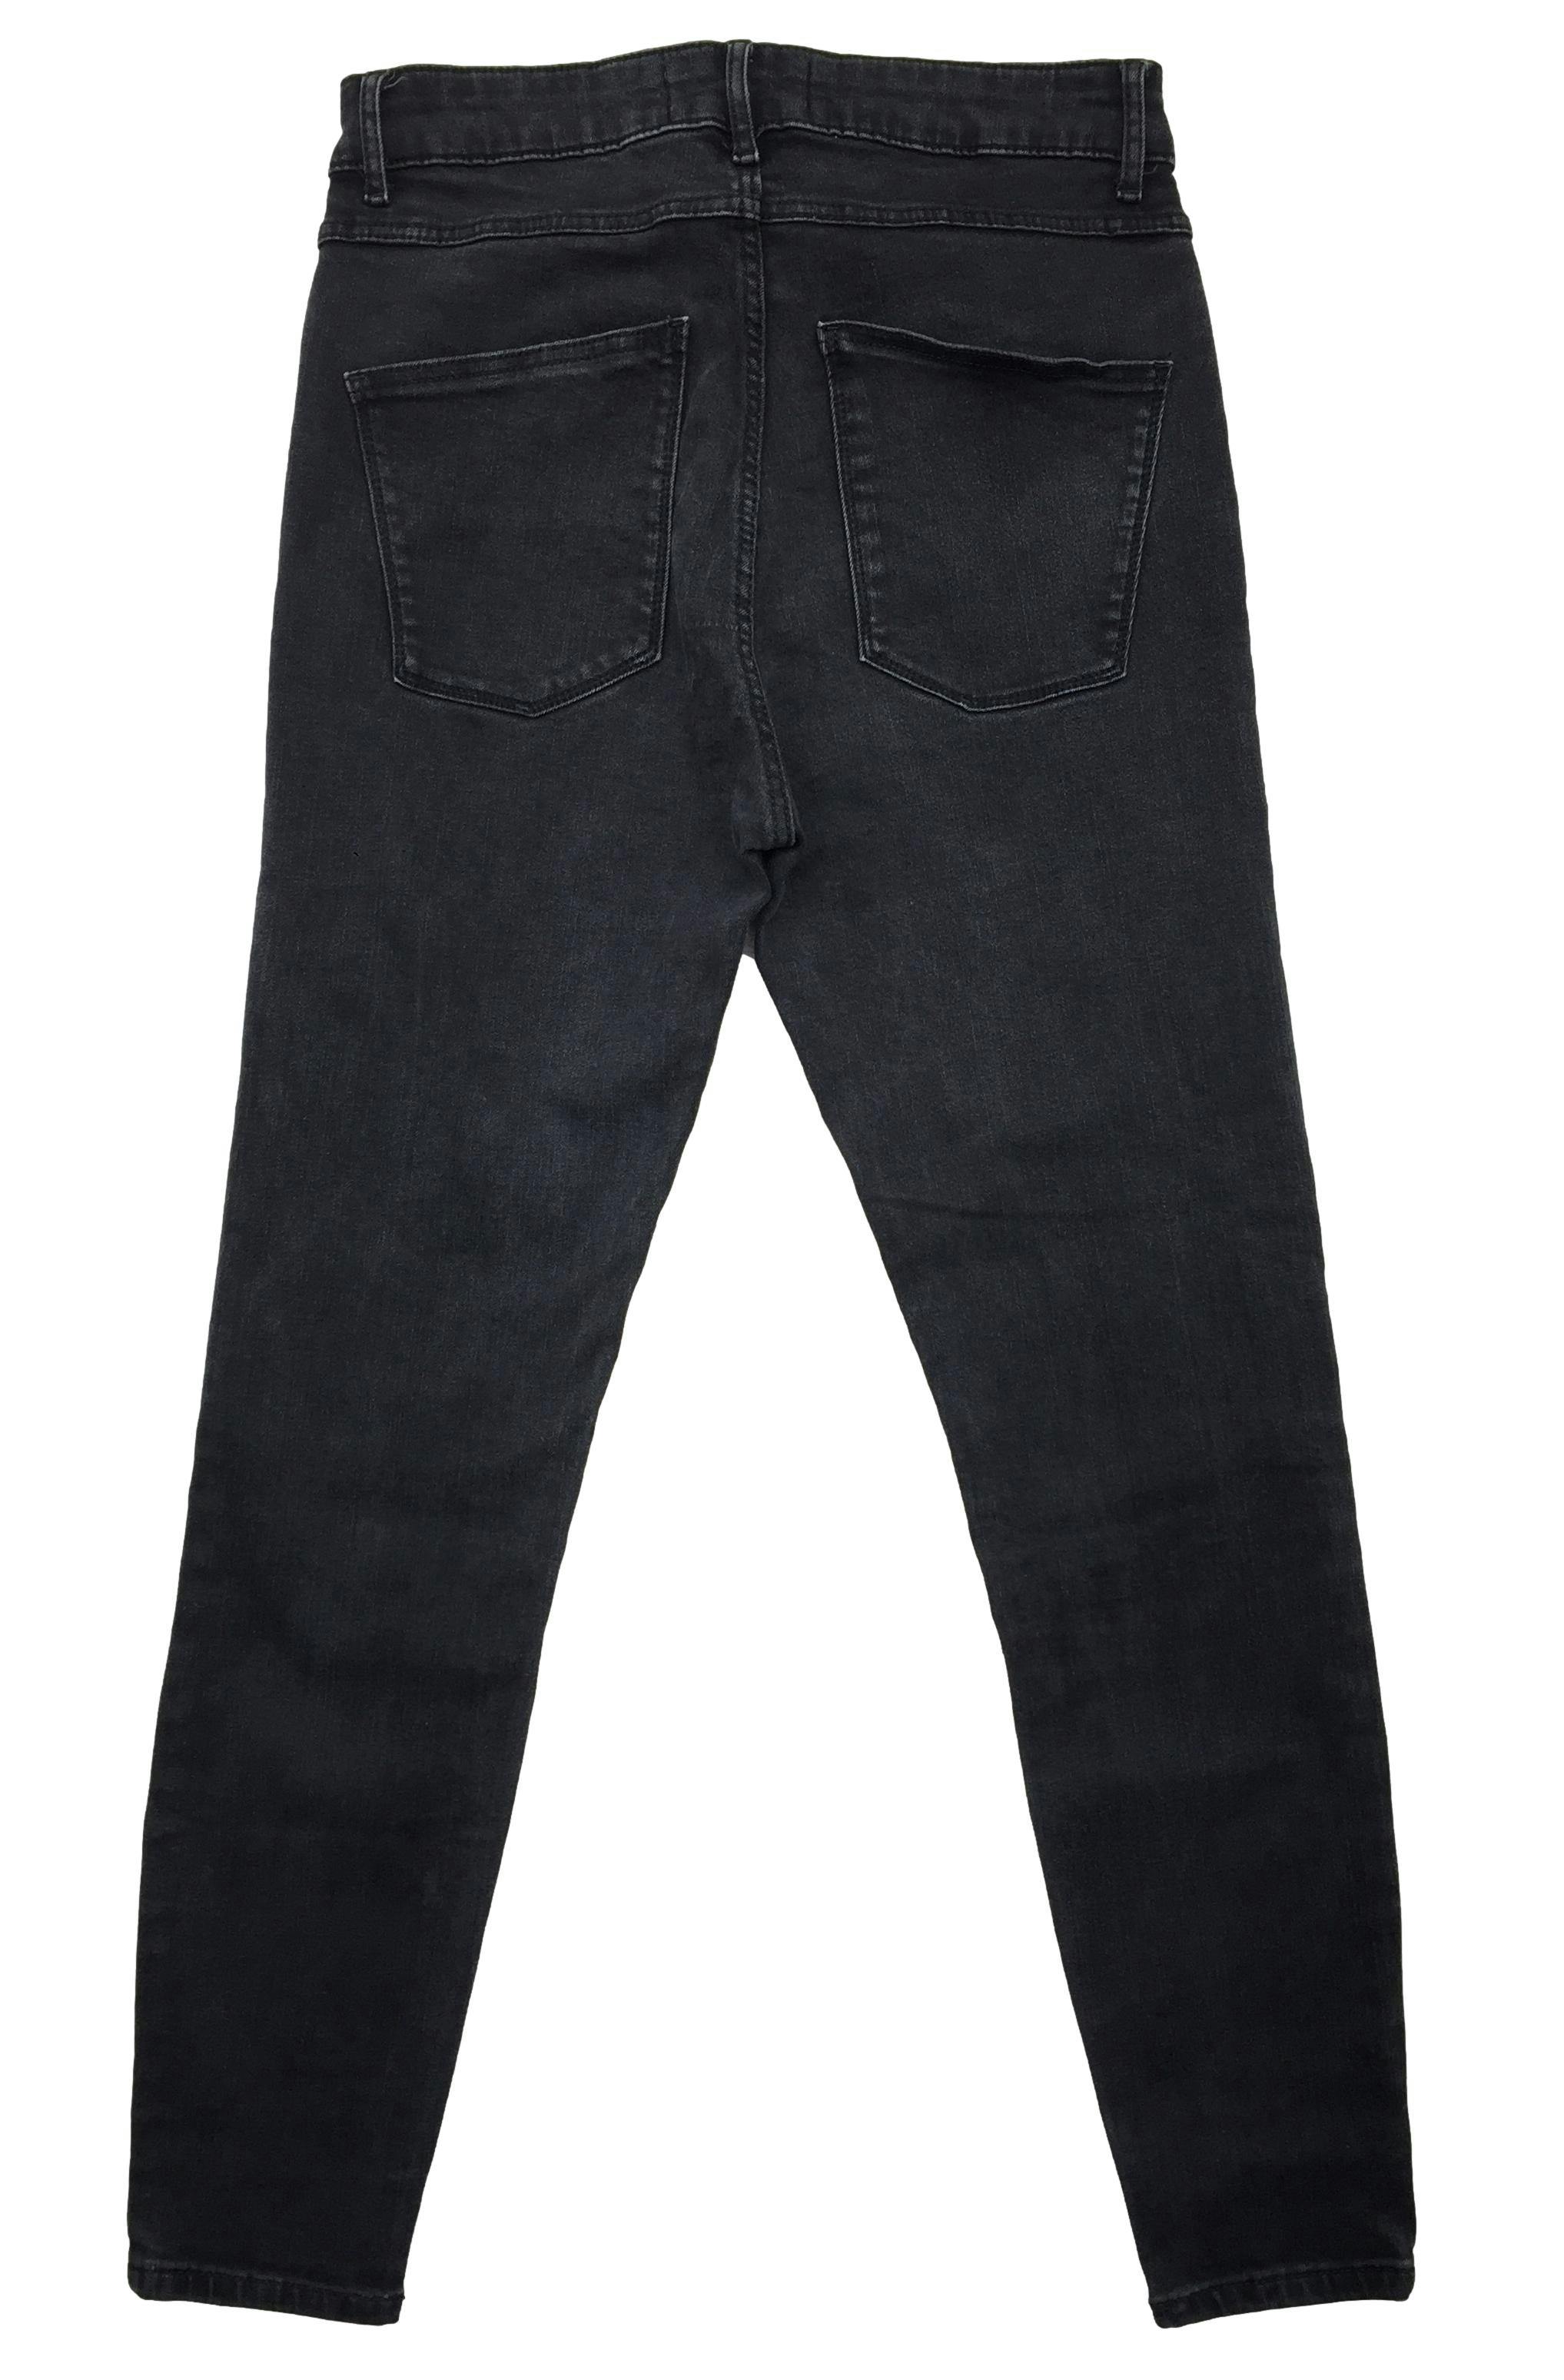 Pantalón jean Zara negro, four pockets. Cintura 66 cm, Tiro 27 cm, Largo 89 cm.